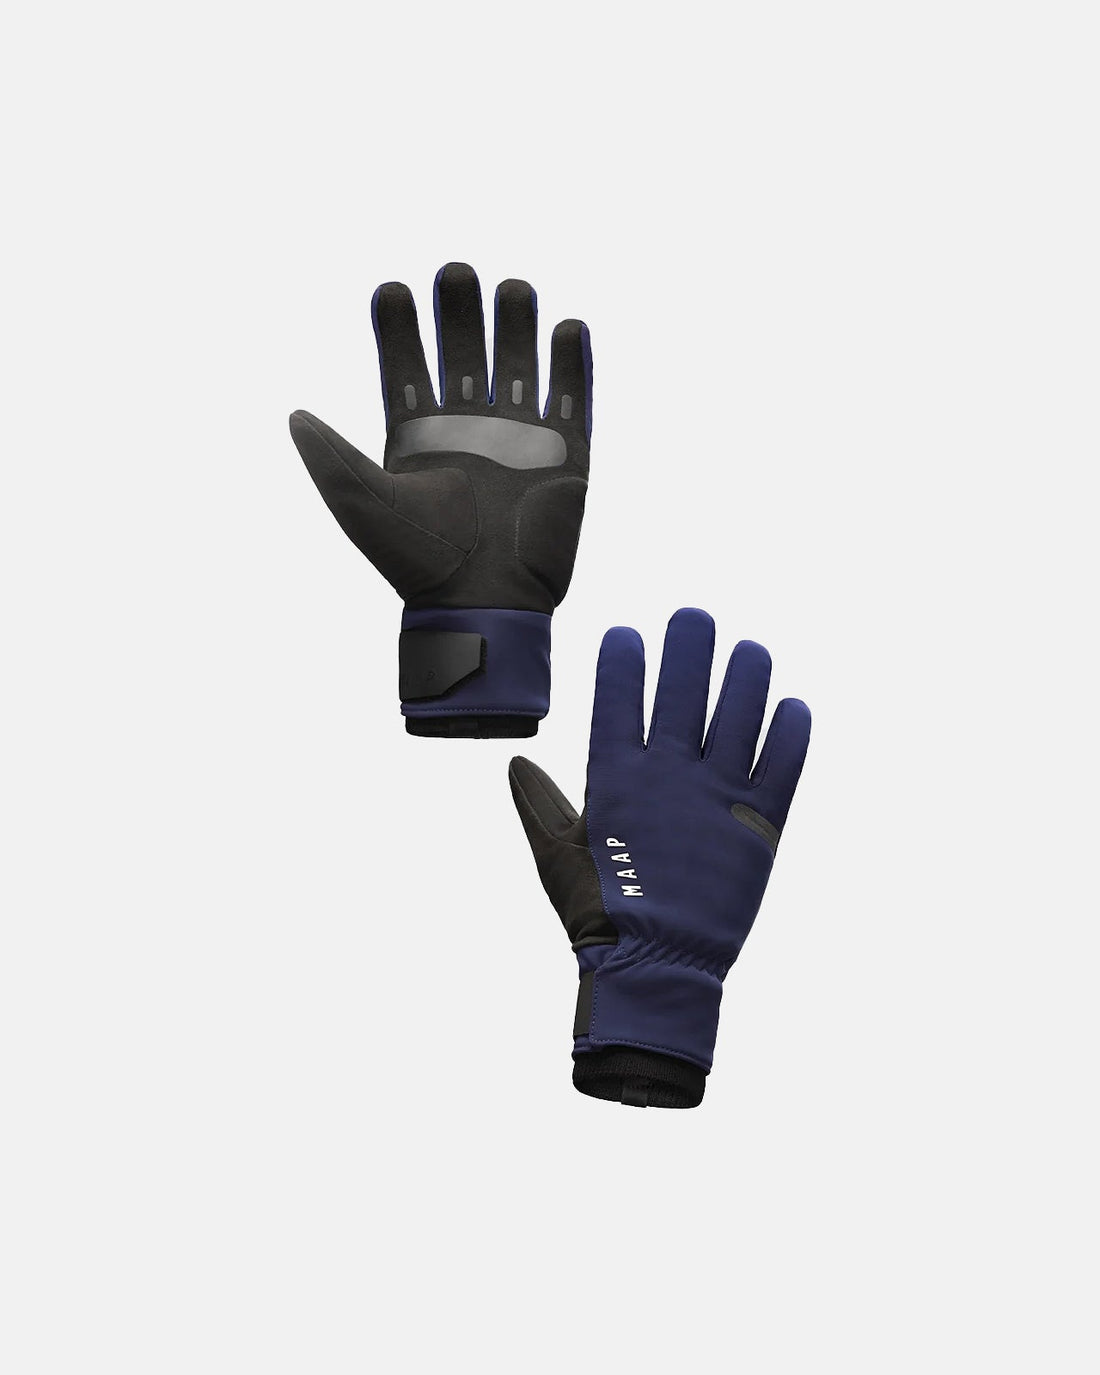 Apex Deep Winter Glove - Navy - MAAP